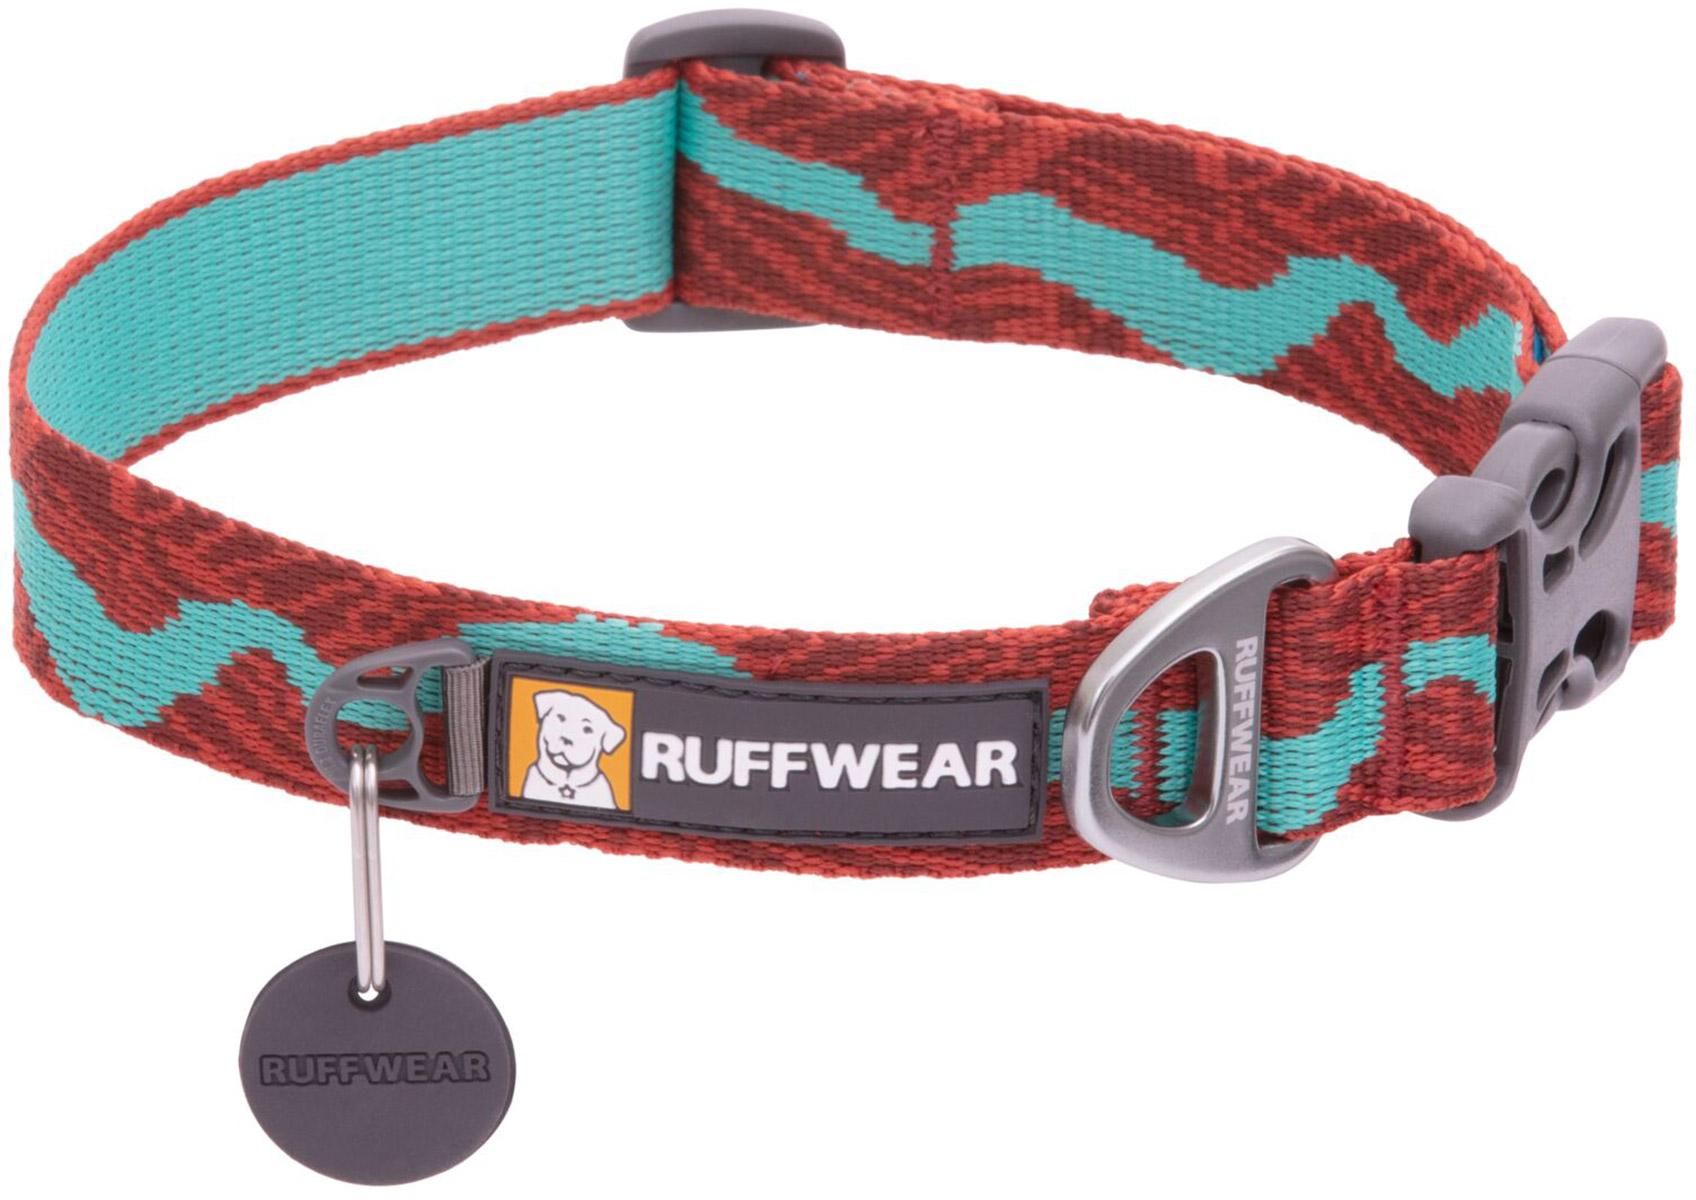 Ruffwear Flat Out Dog Collar - Colorado River